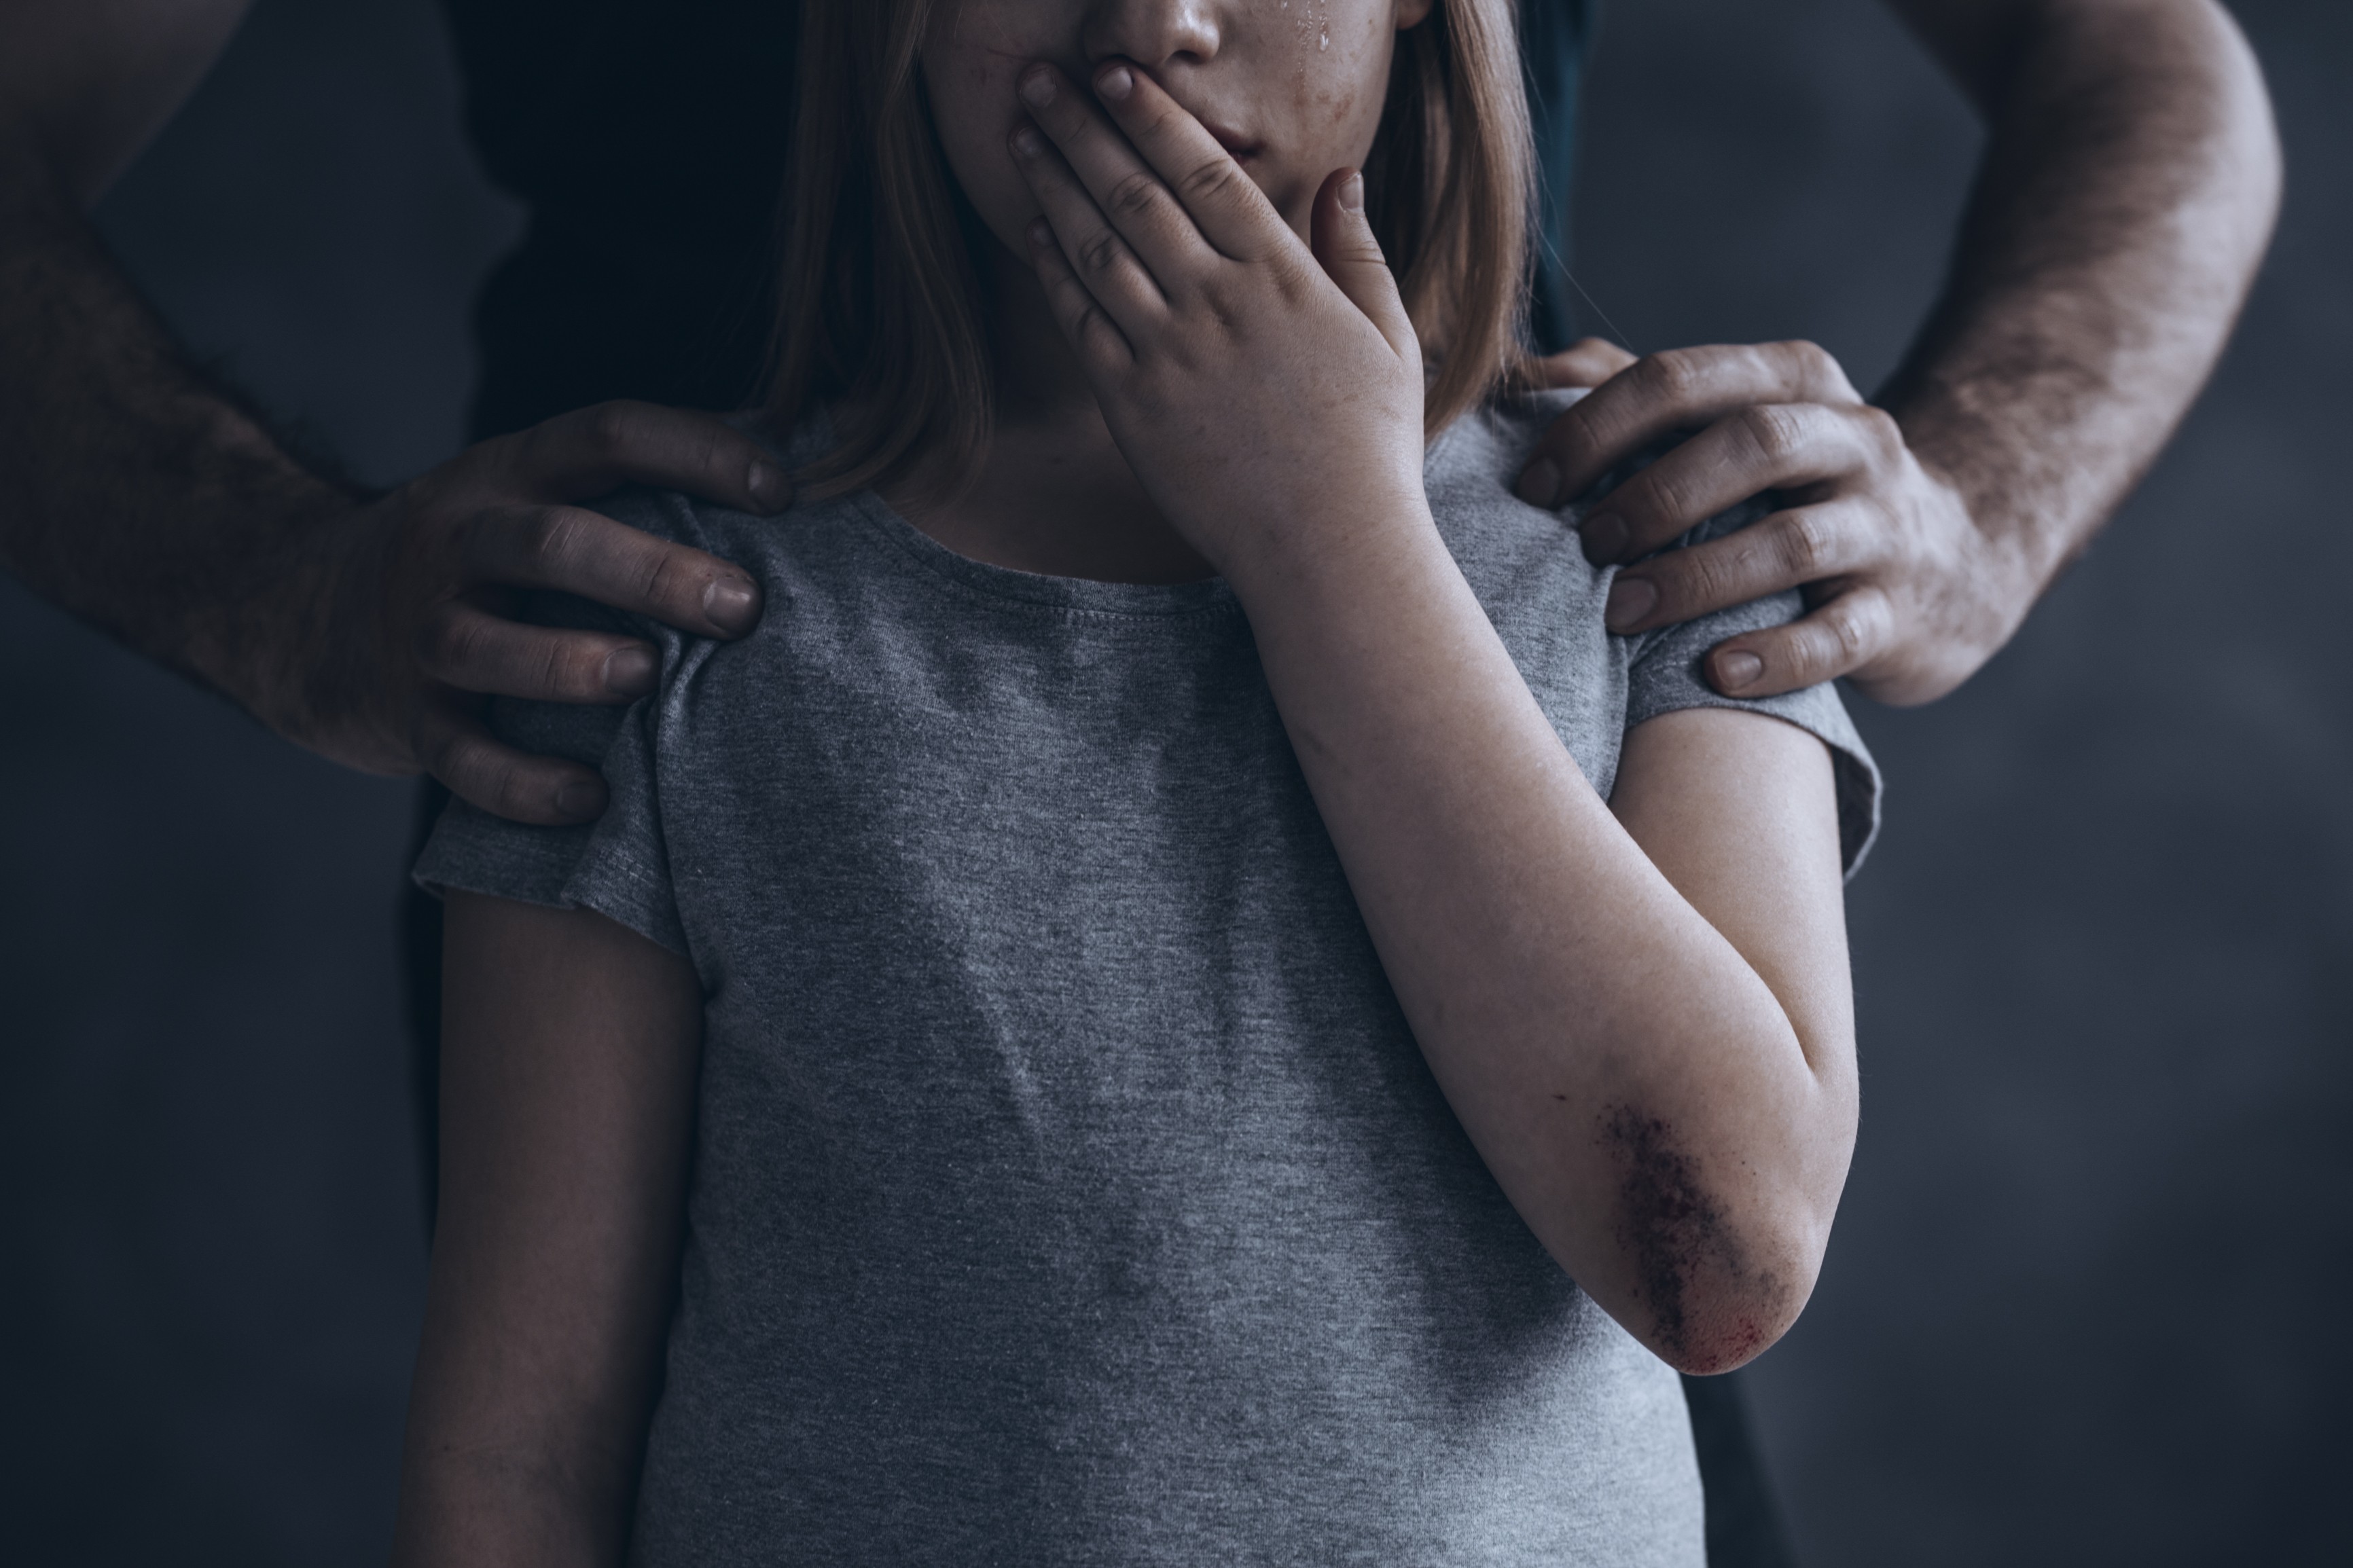 In 2014, 1.7 billion children experienced interpersonal violence. Photo: Shutterstock